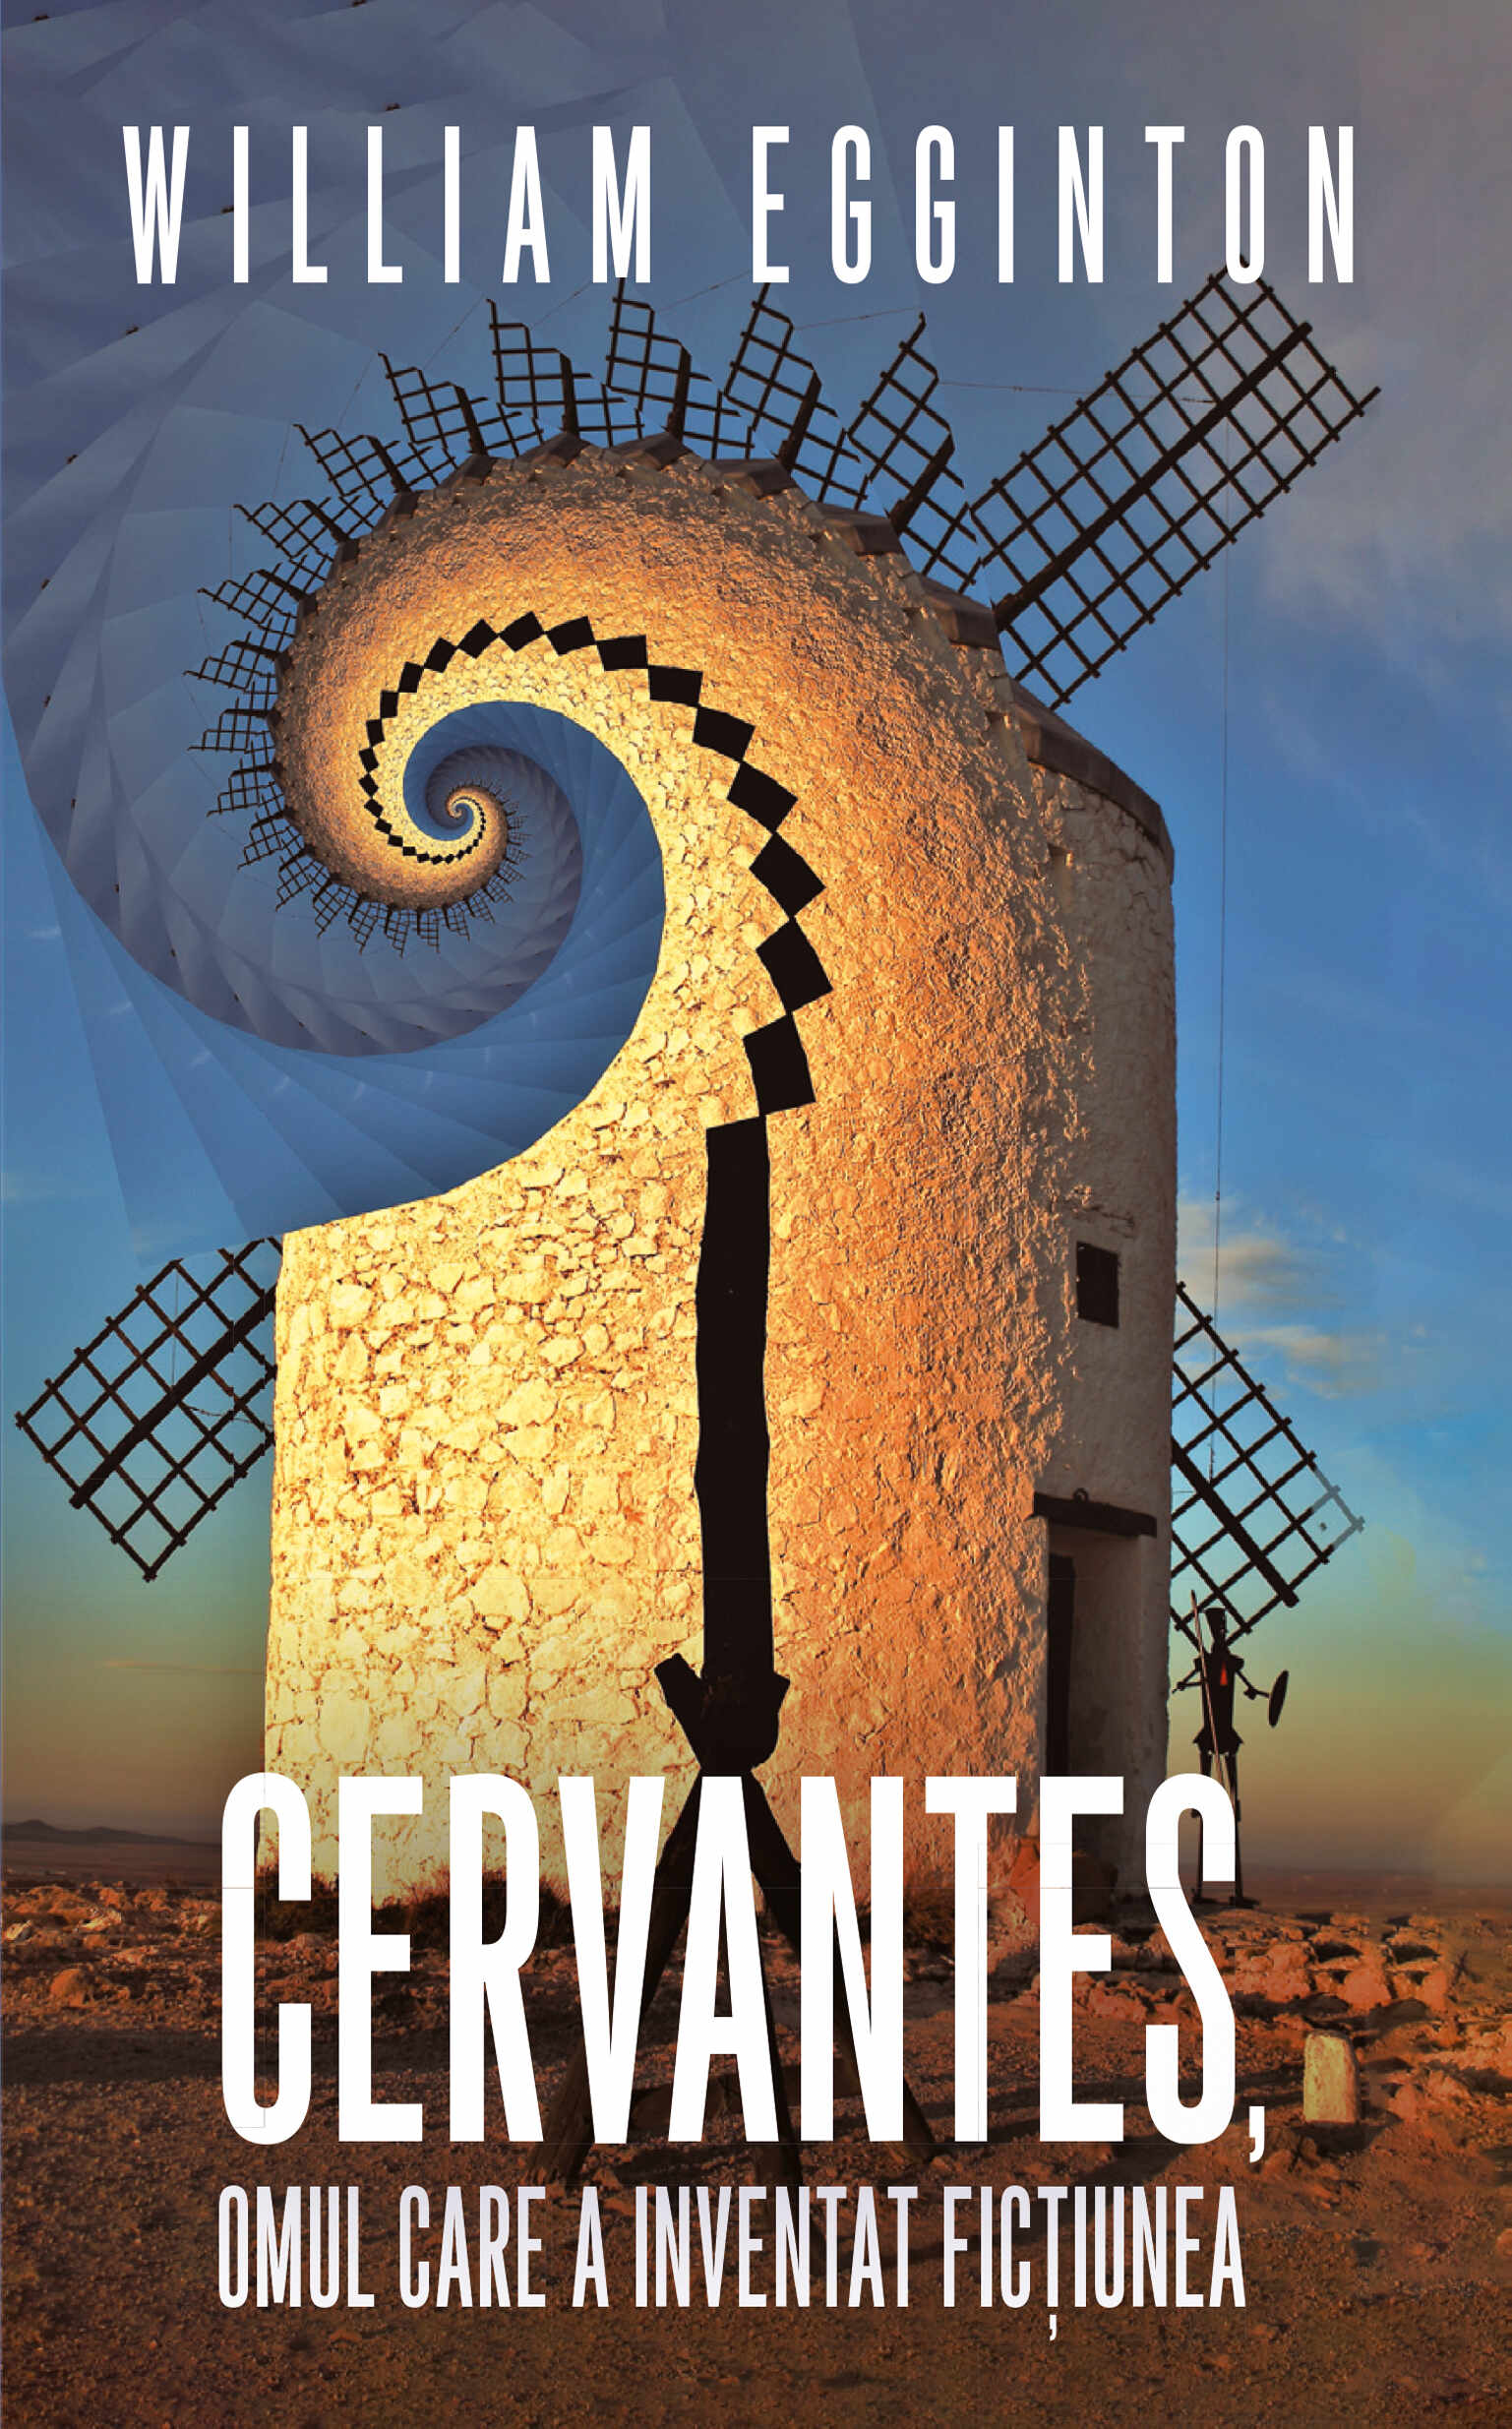 Cervantes, omul care a inventat fictiunea | William Egginton